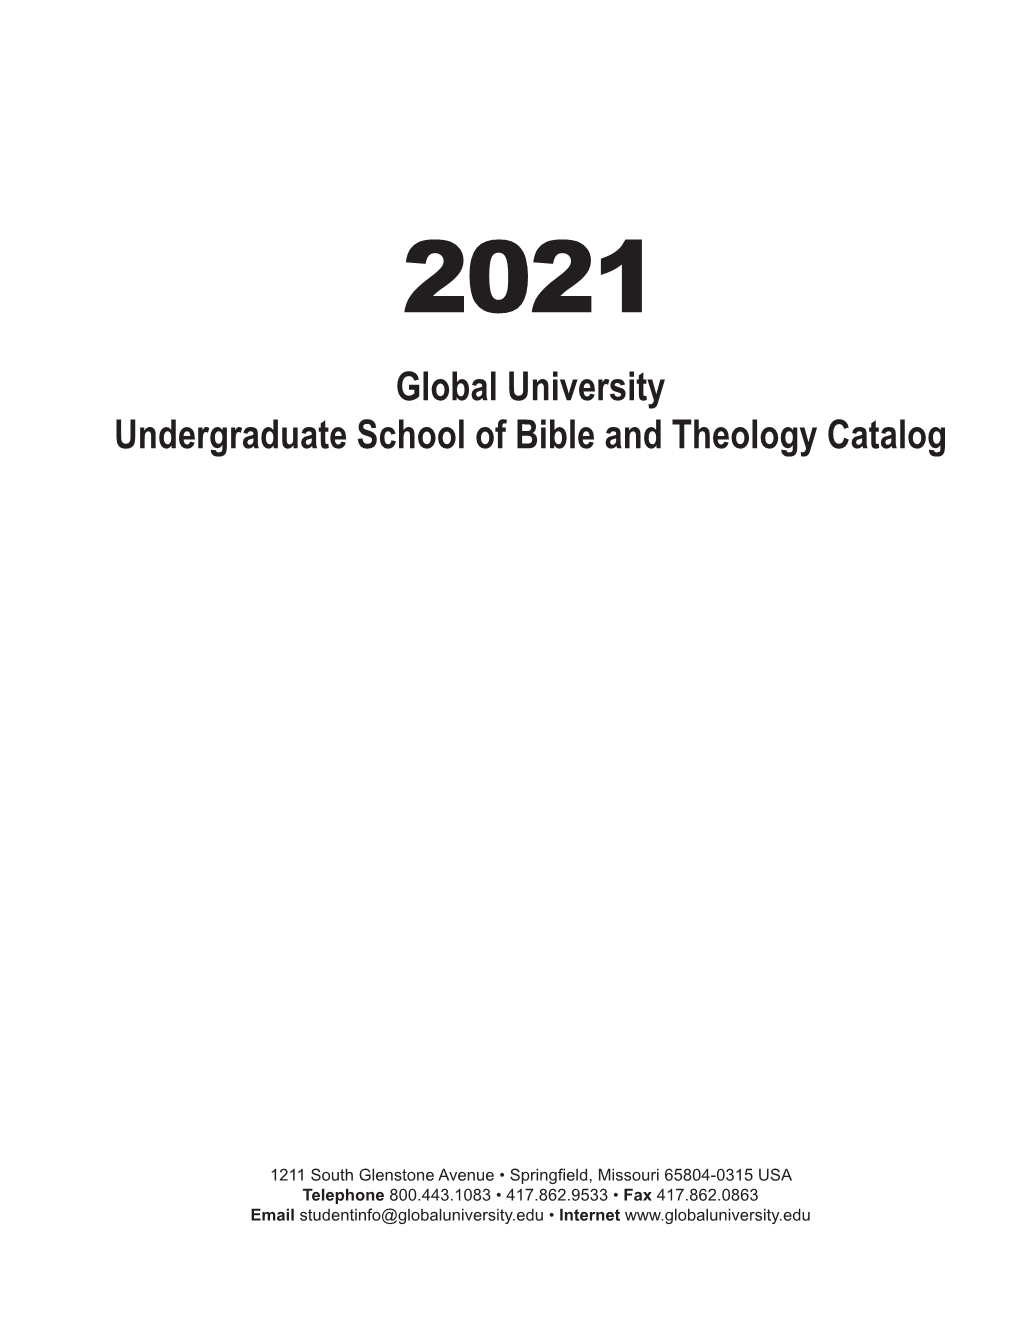 Global University Undergraduate School of Bible and Theology Catalog